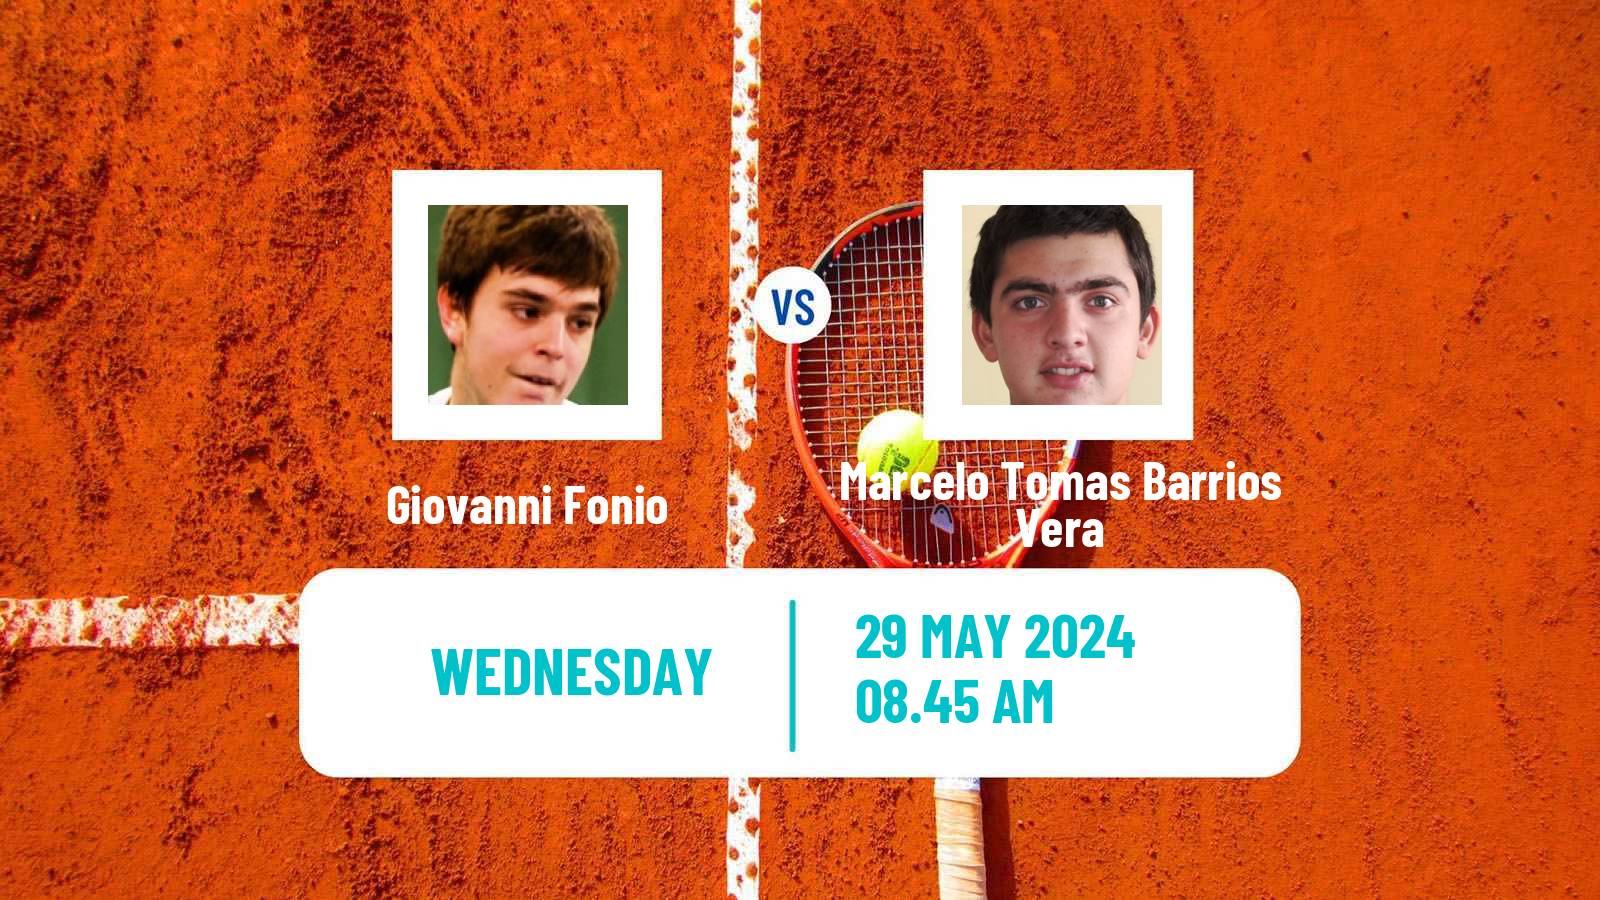 Tennis Vicenza Challenger Men Giovanni Fonio - Marcelo Tomas Barrios Vera